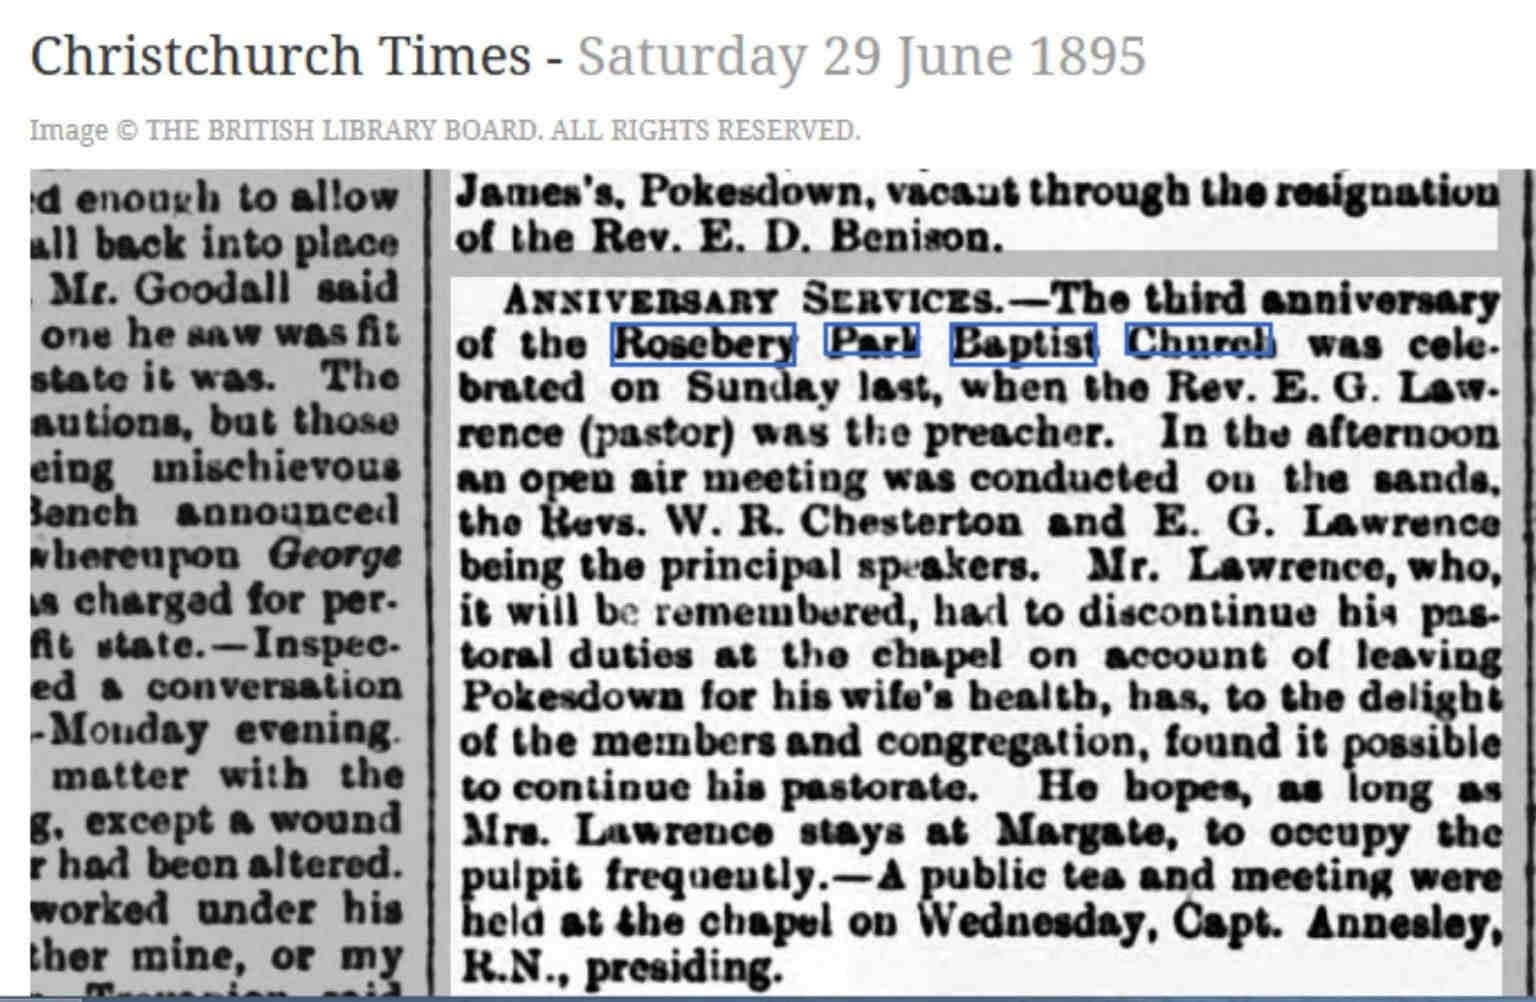 Third anniversary of Rosebery Park Baptist Church newspaper article 1895